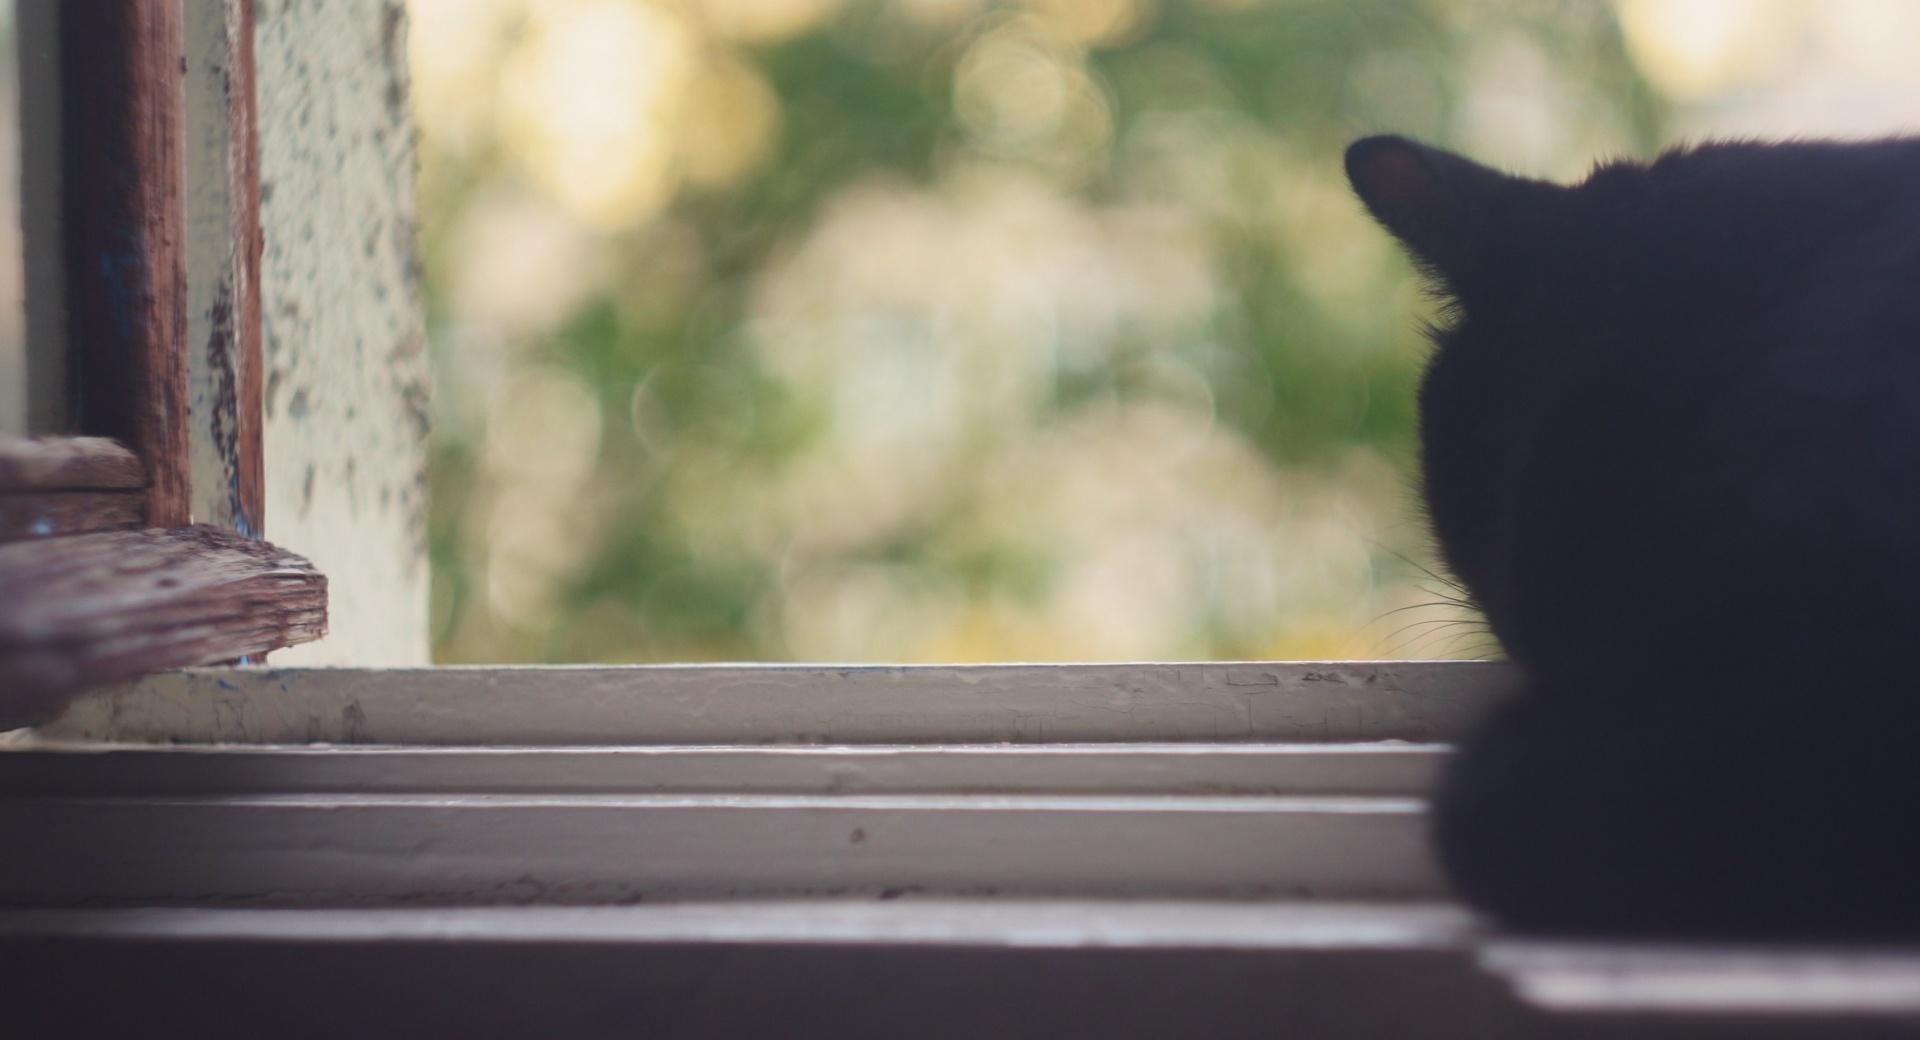 Black Cat Near Window at 1280 x 960 size wallpapers HD quality